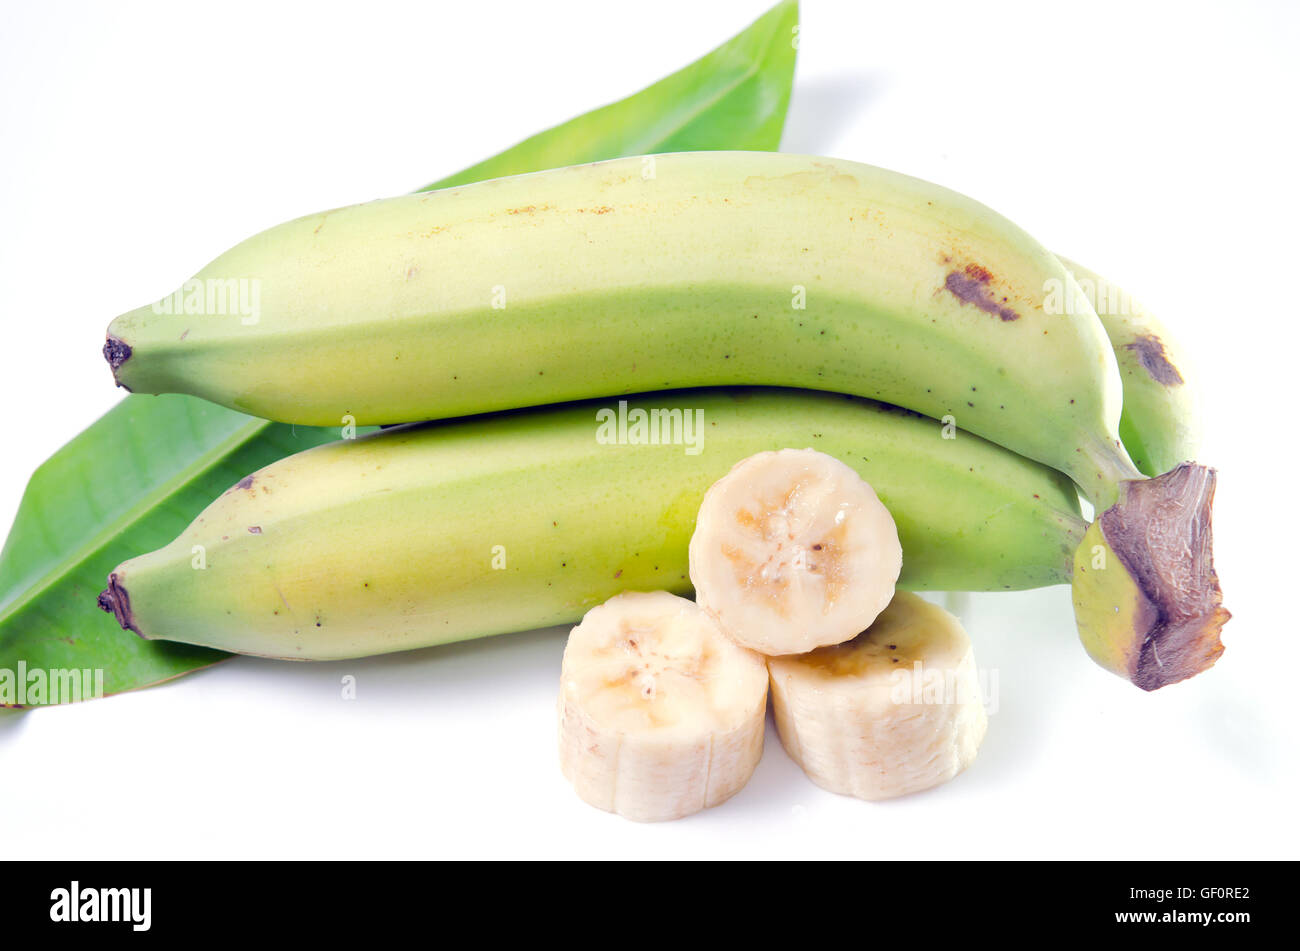 Banana (Other names are Musa banana acuminata, Musa balbisiana, and Musa x paradisiaca) fruit with leaf isolated on white Stock Photo